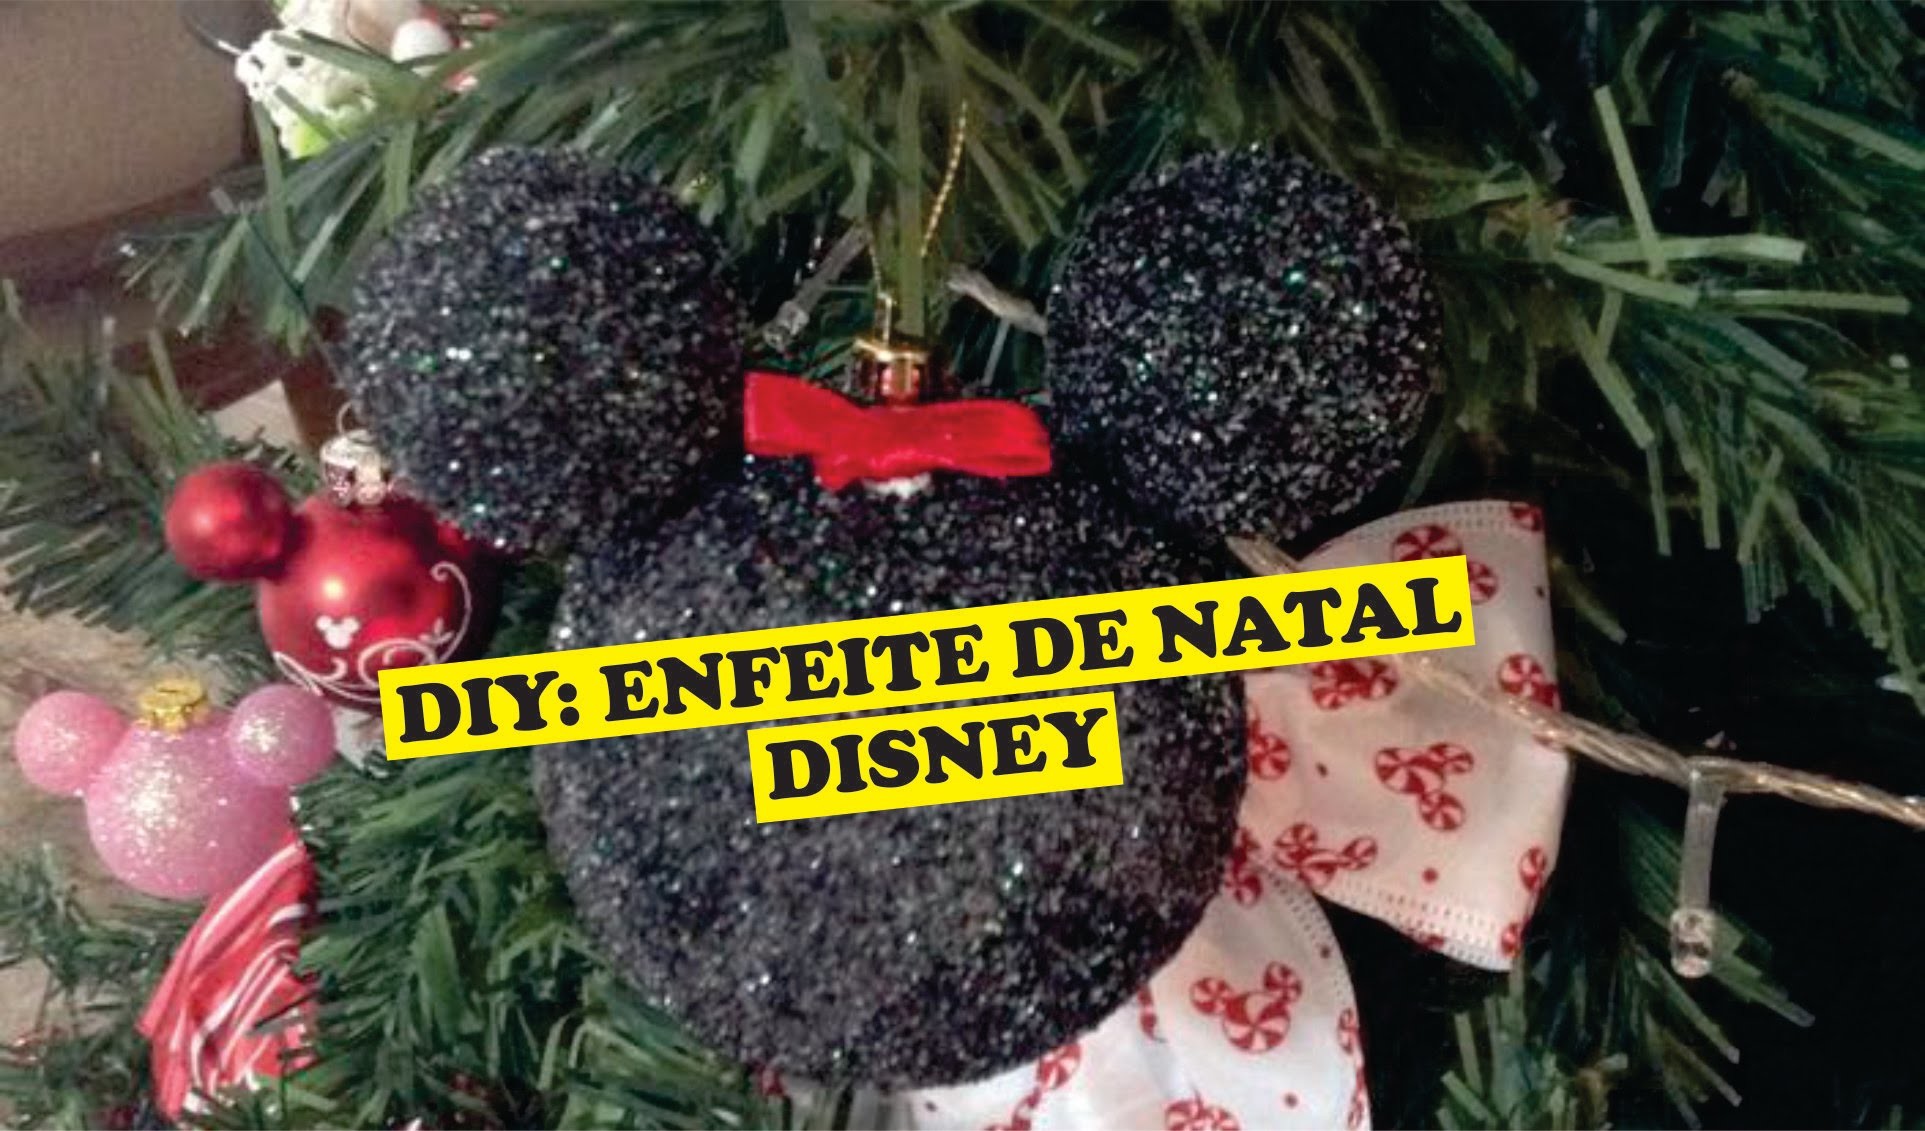 DIY: Enfeite de Natal Disney - Mickey e Minnie